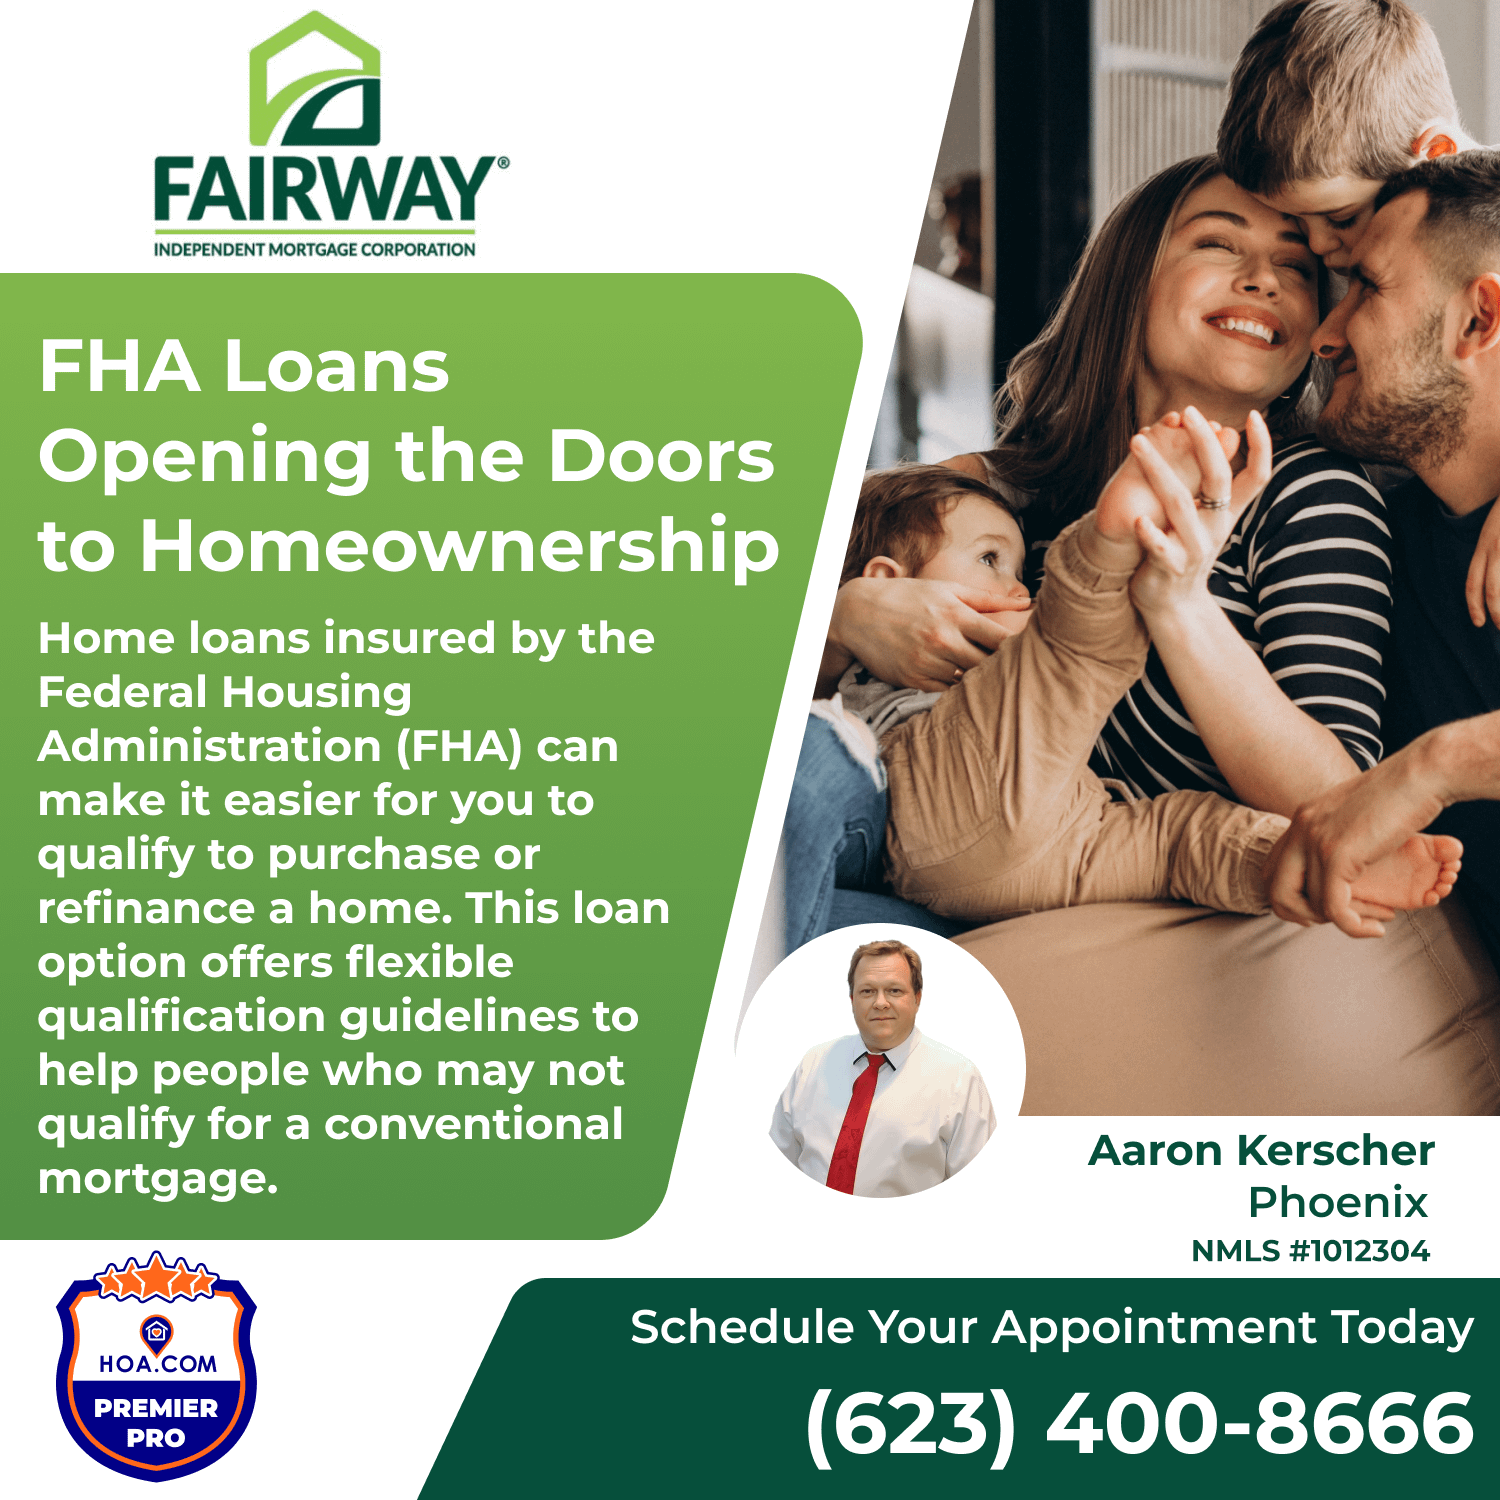 FHA Loans Opening the Doors to Homeowenership